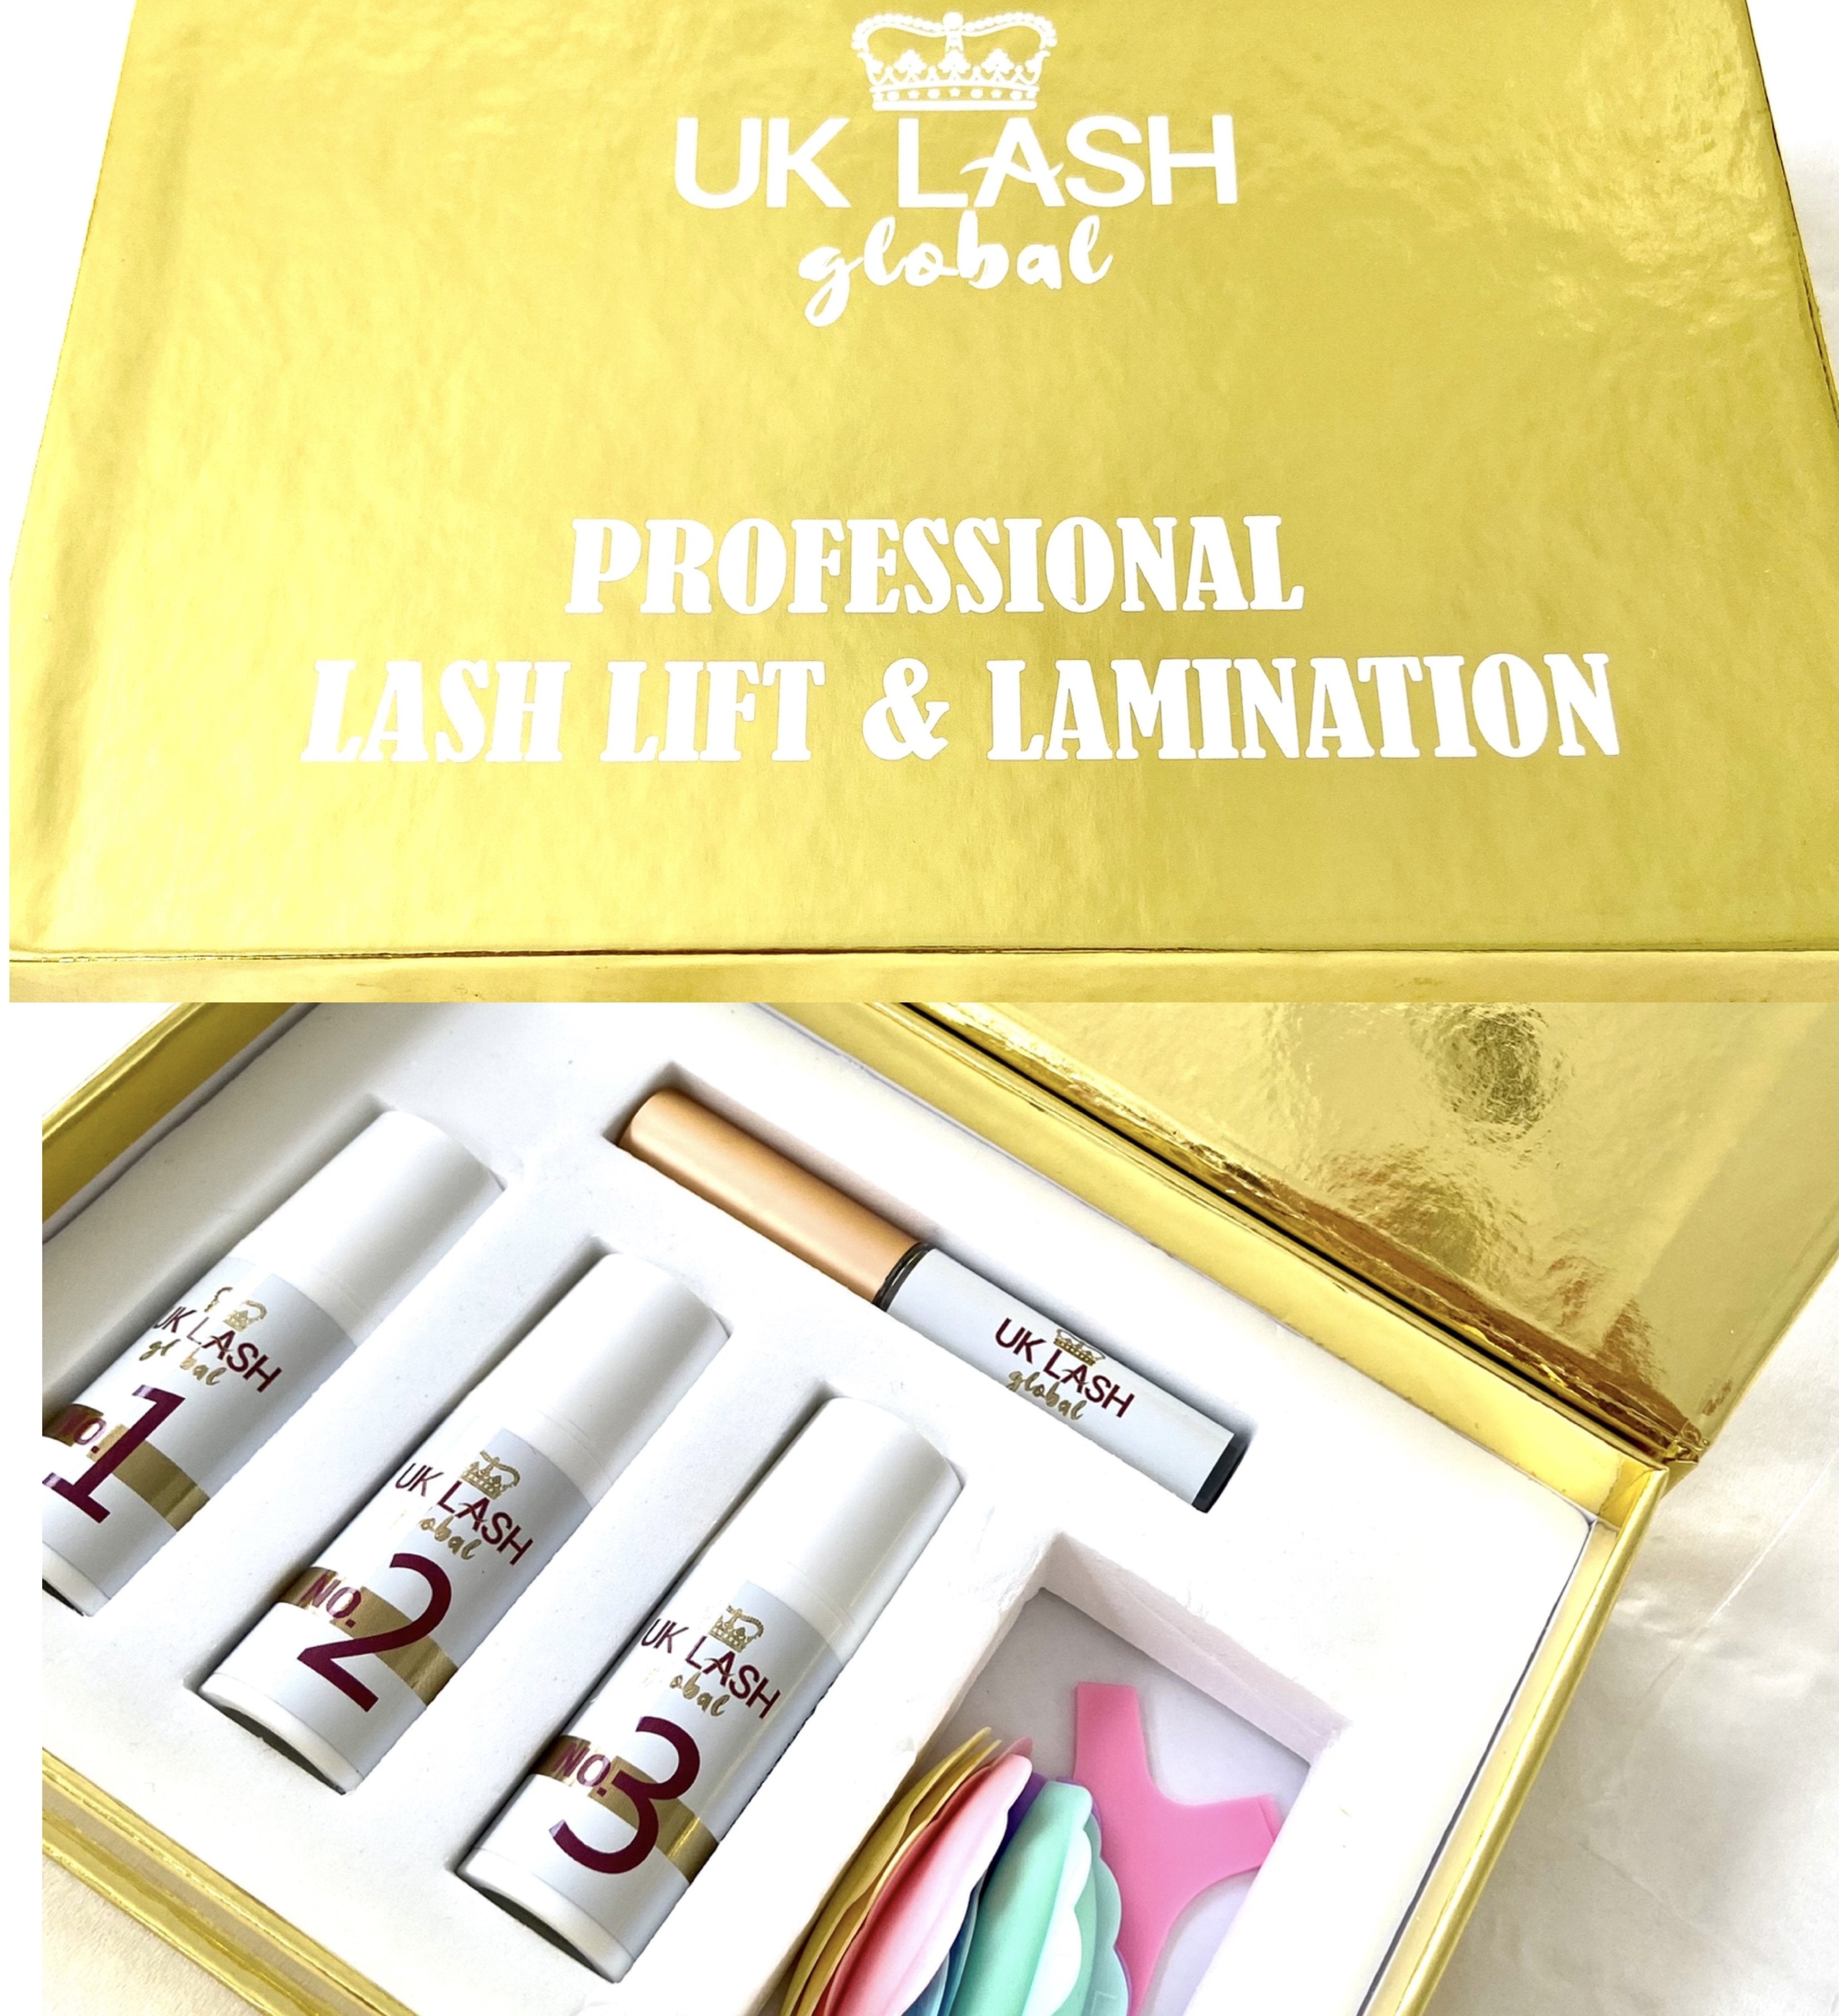 - Lash Lift | UK LASH GLOBAL